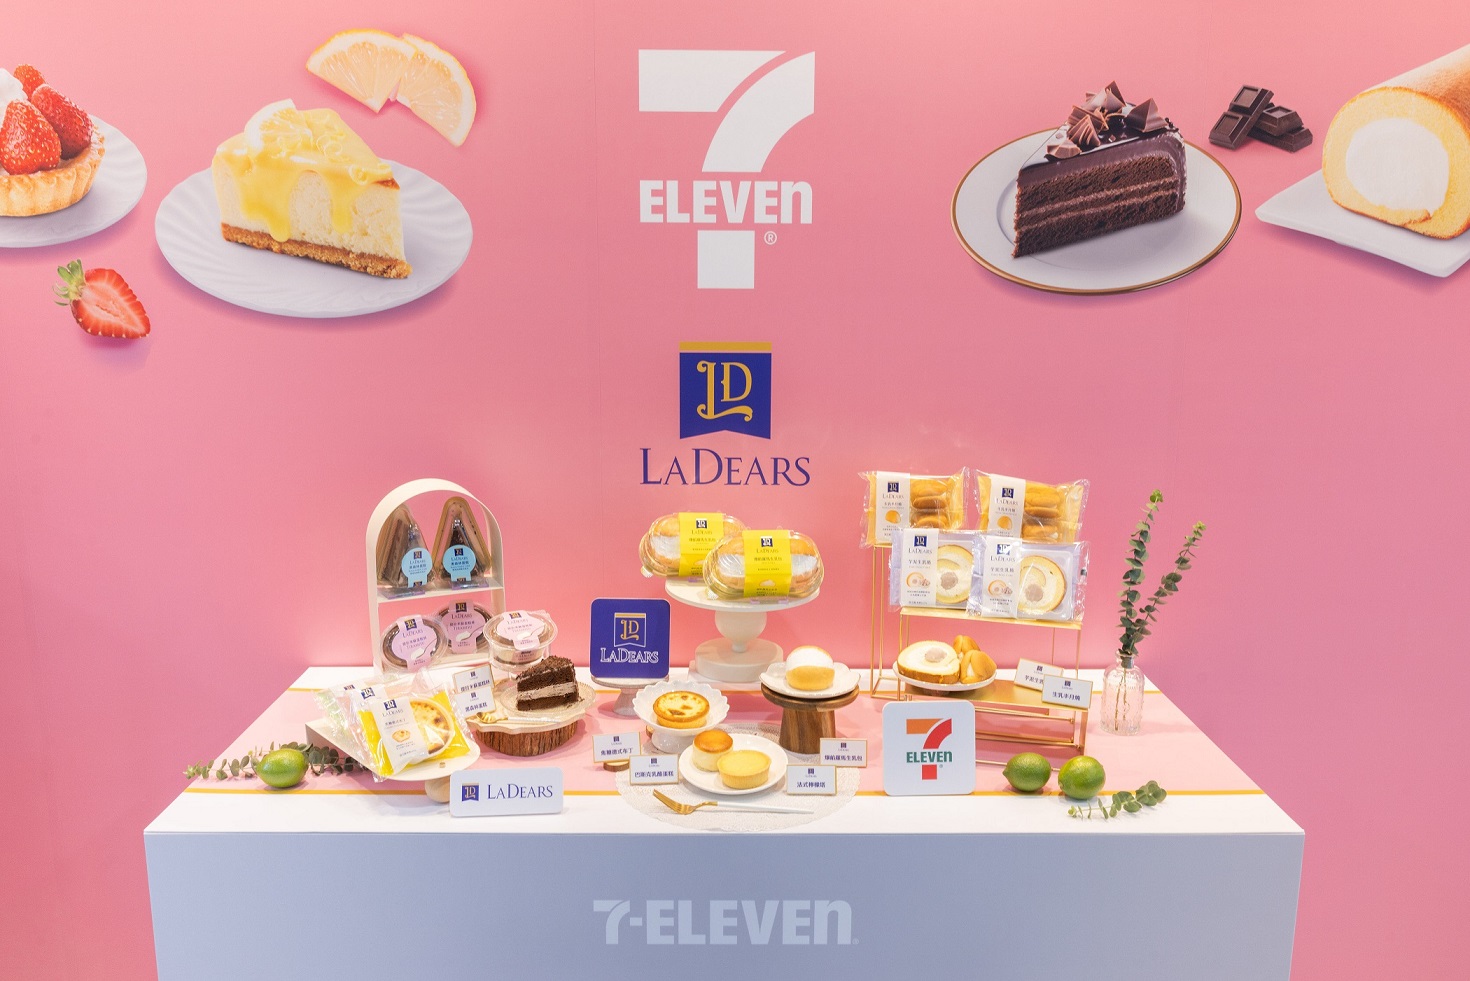 7-ELEVEN自今年5月起更全新推出自有甜点品牌「LADEARS」，八款手工甜点全新包装登场。统一超/提供